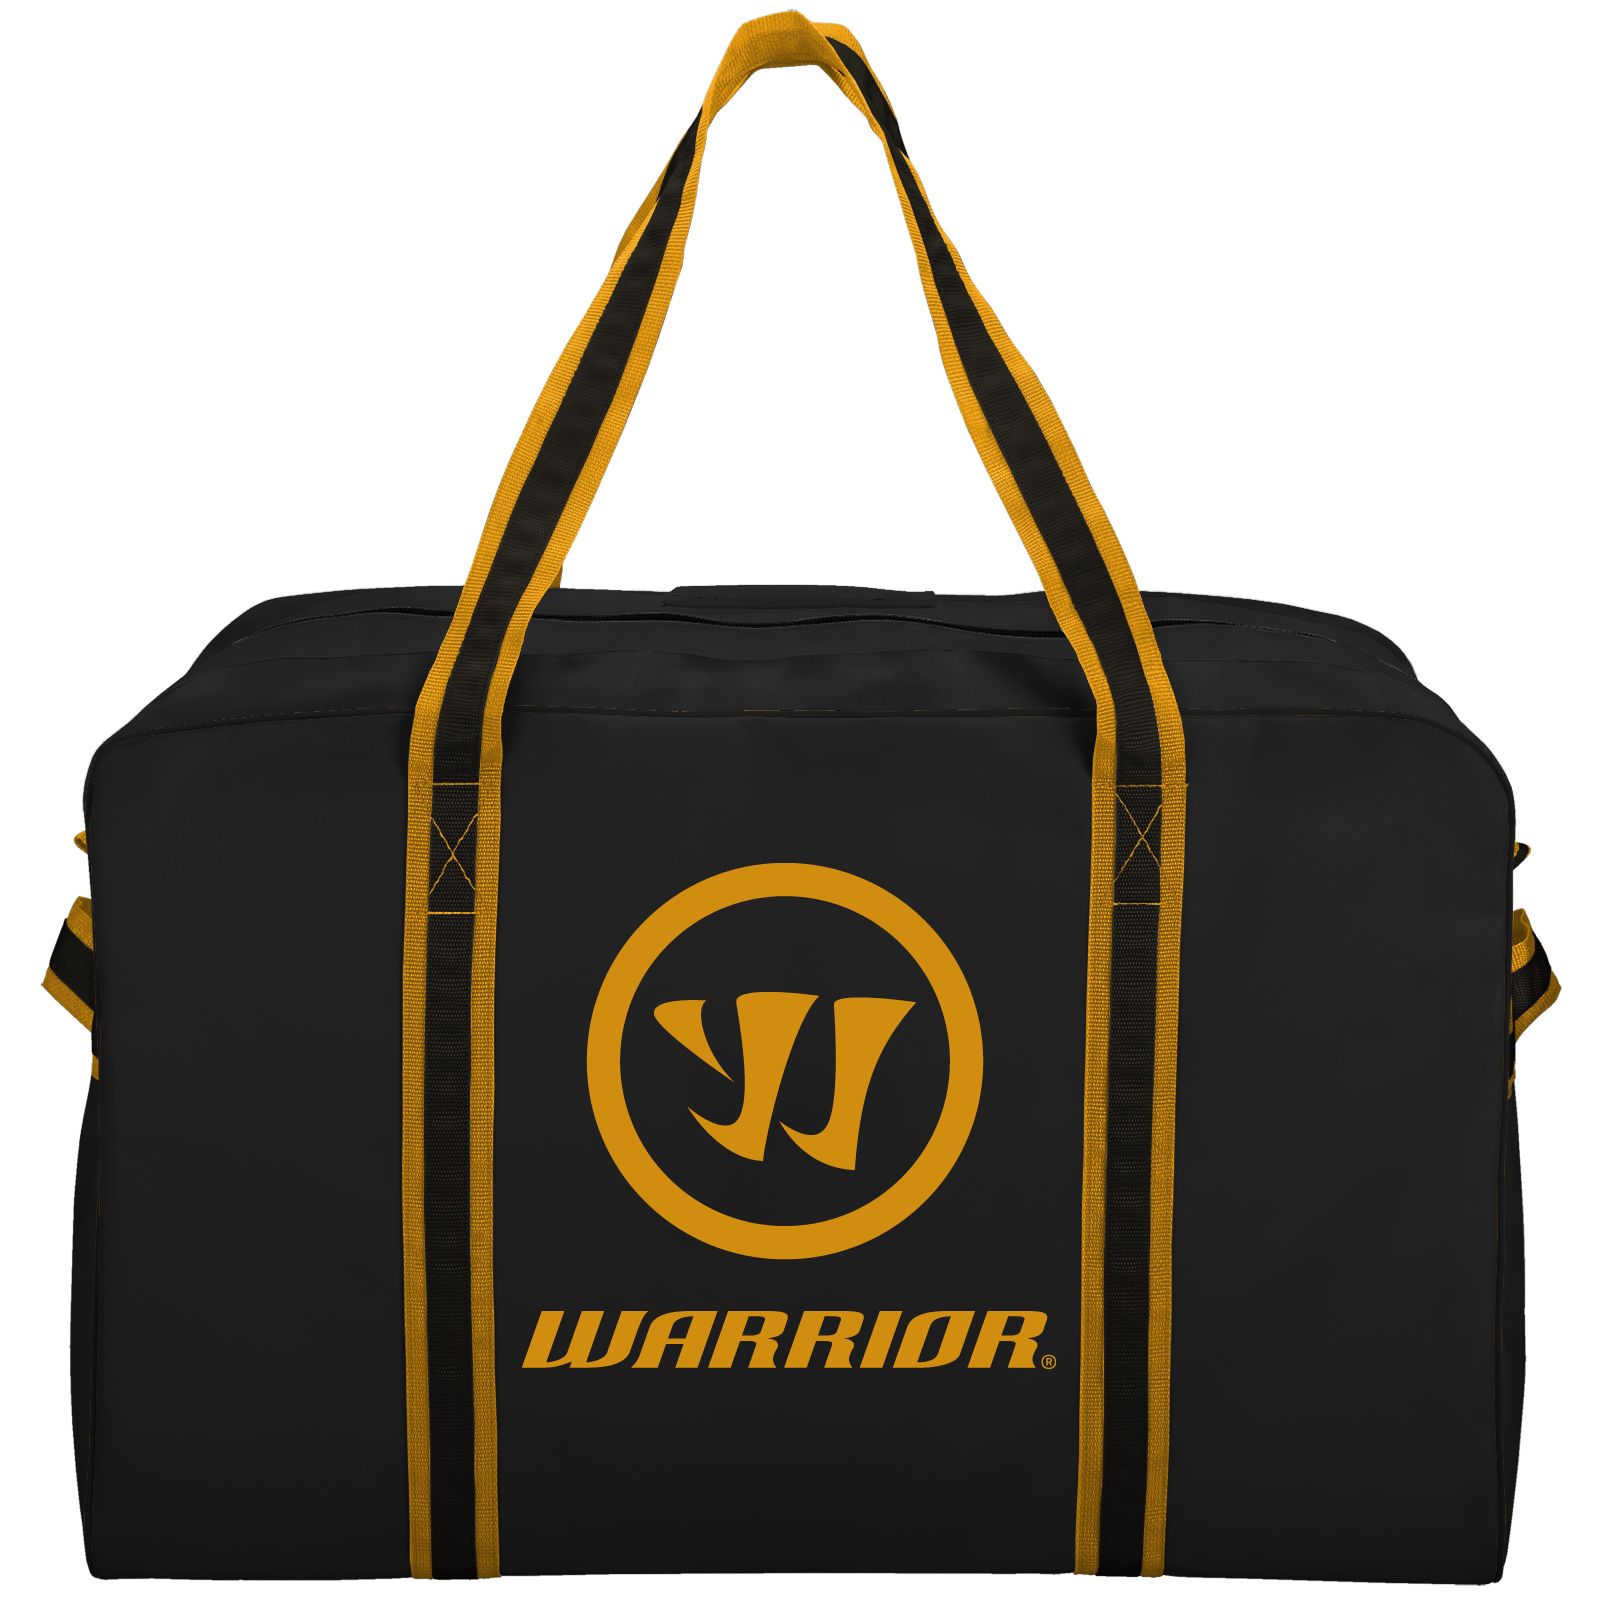 Warrior Pro Bag, Black with Sports Gold image number 0